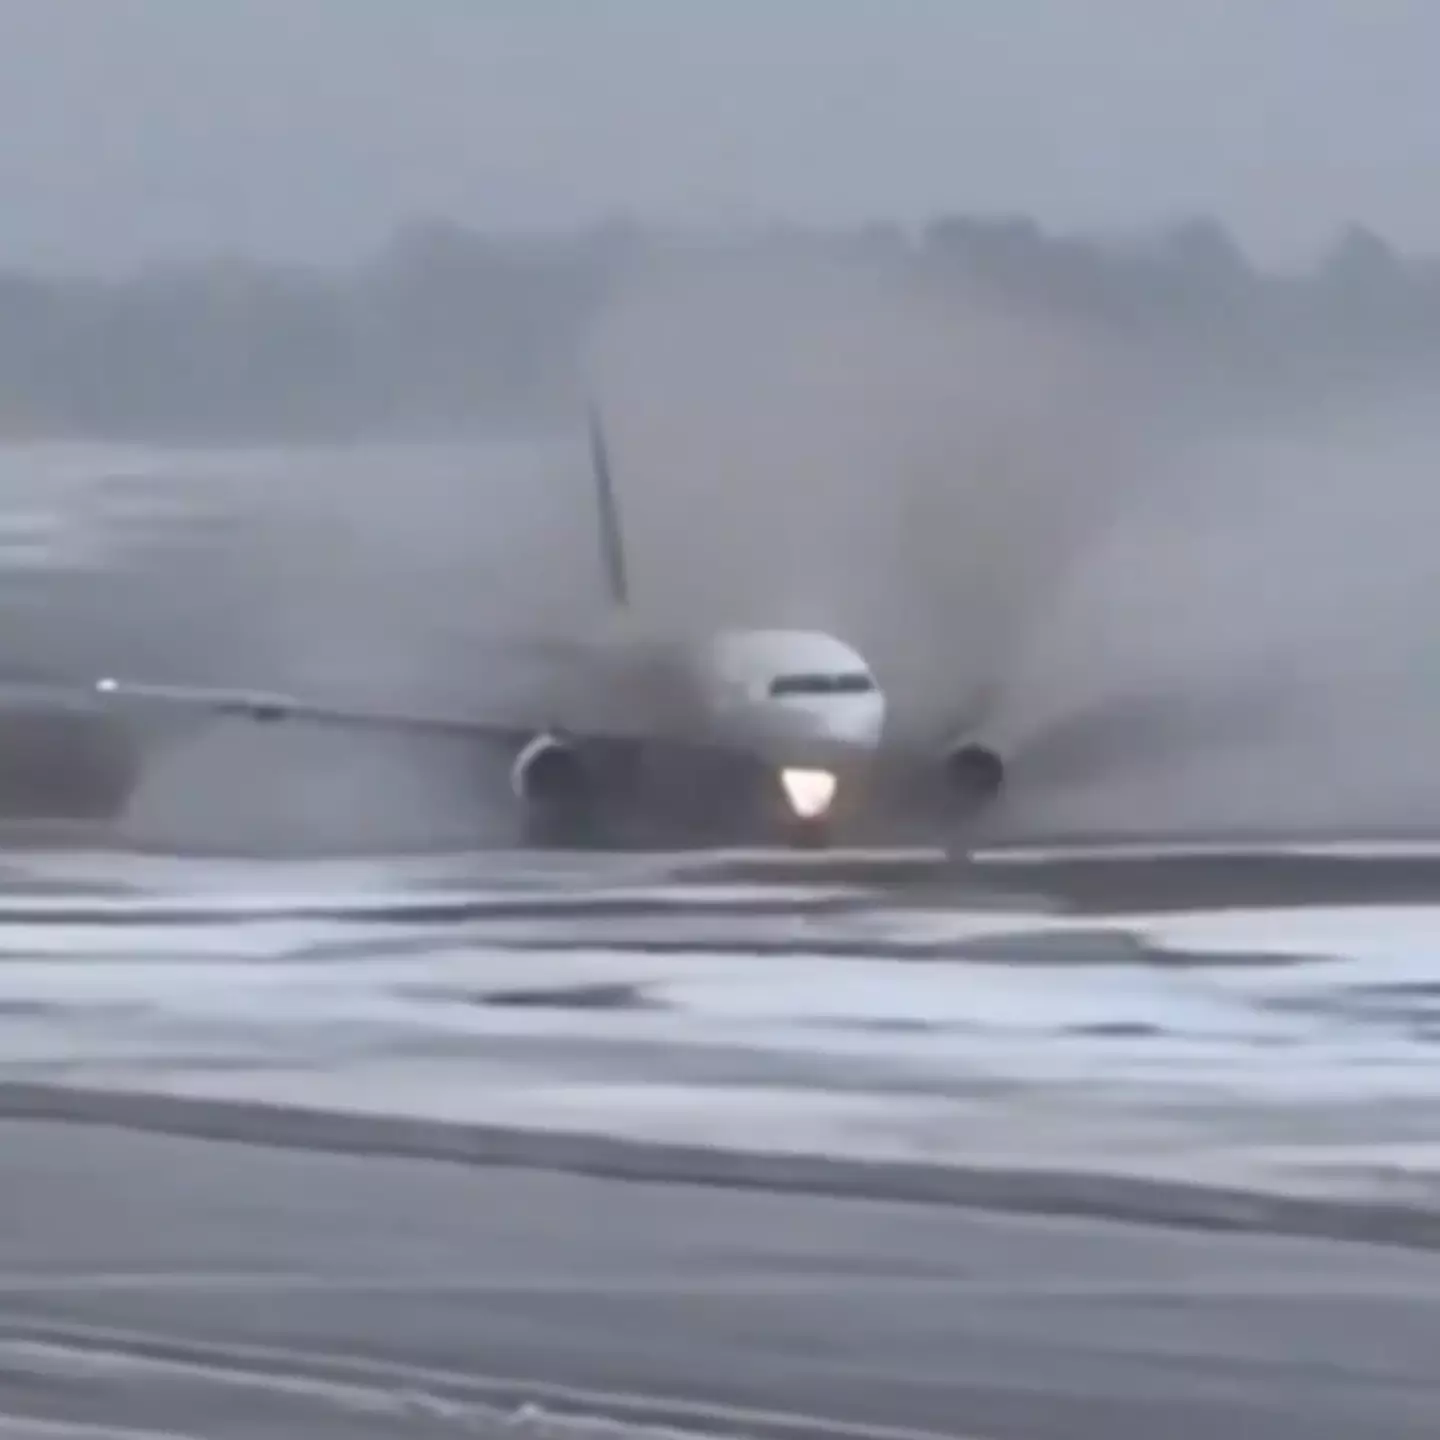 Terrifying moment passenger plane skids through mud after landing on icy runway